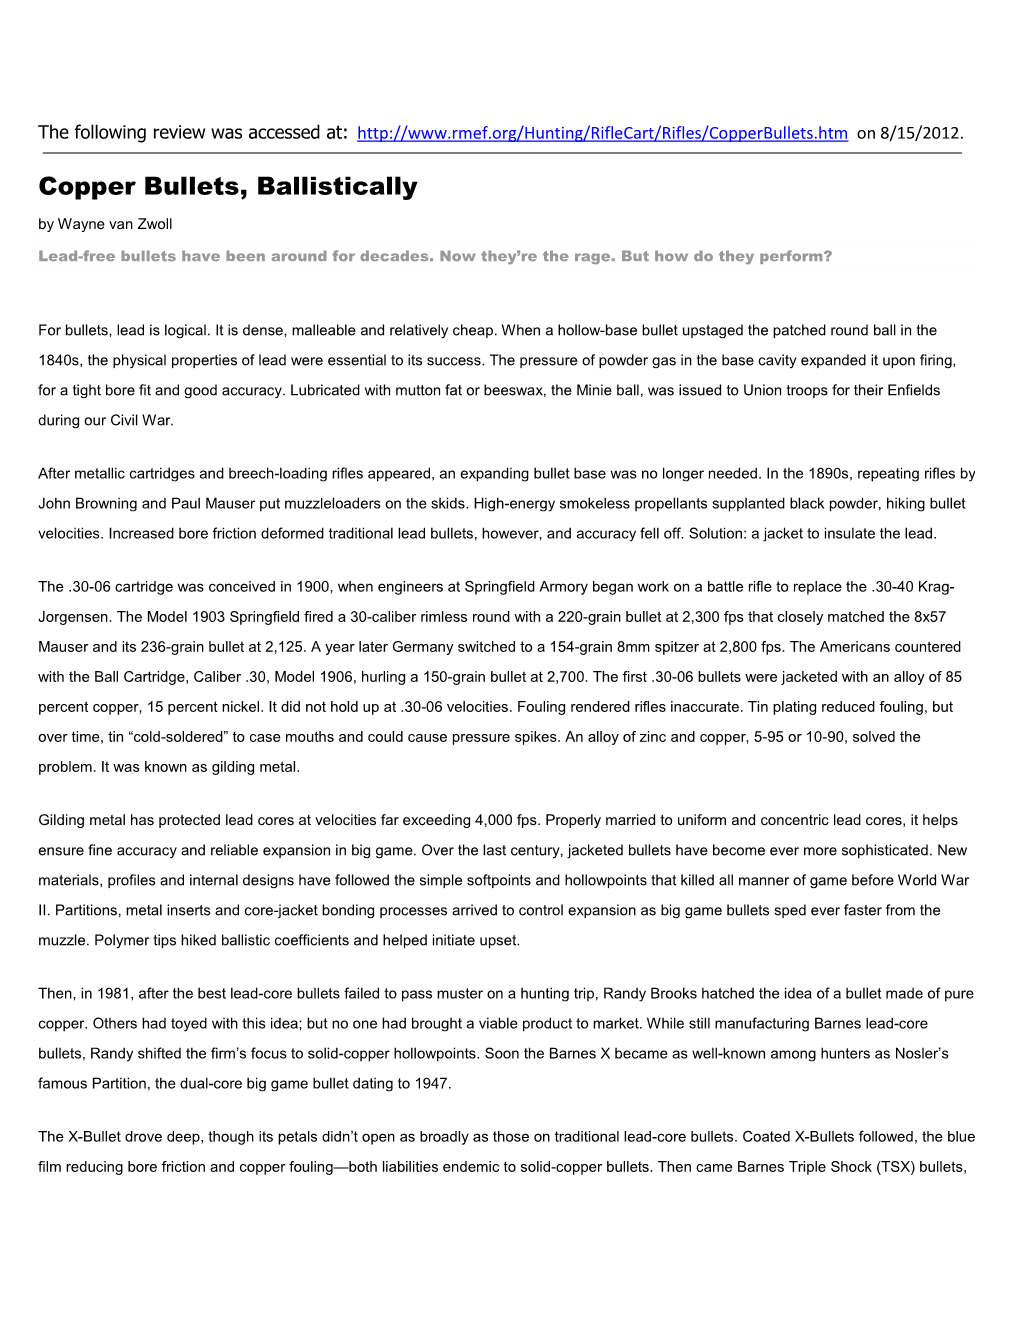 Copper Bullets, Ballistically by Wayne Van Zwoll